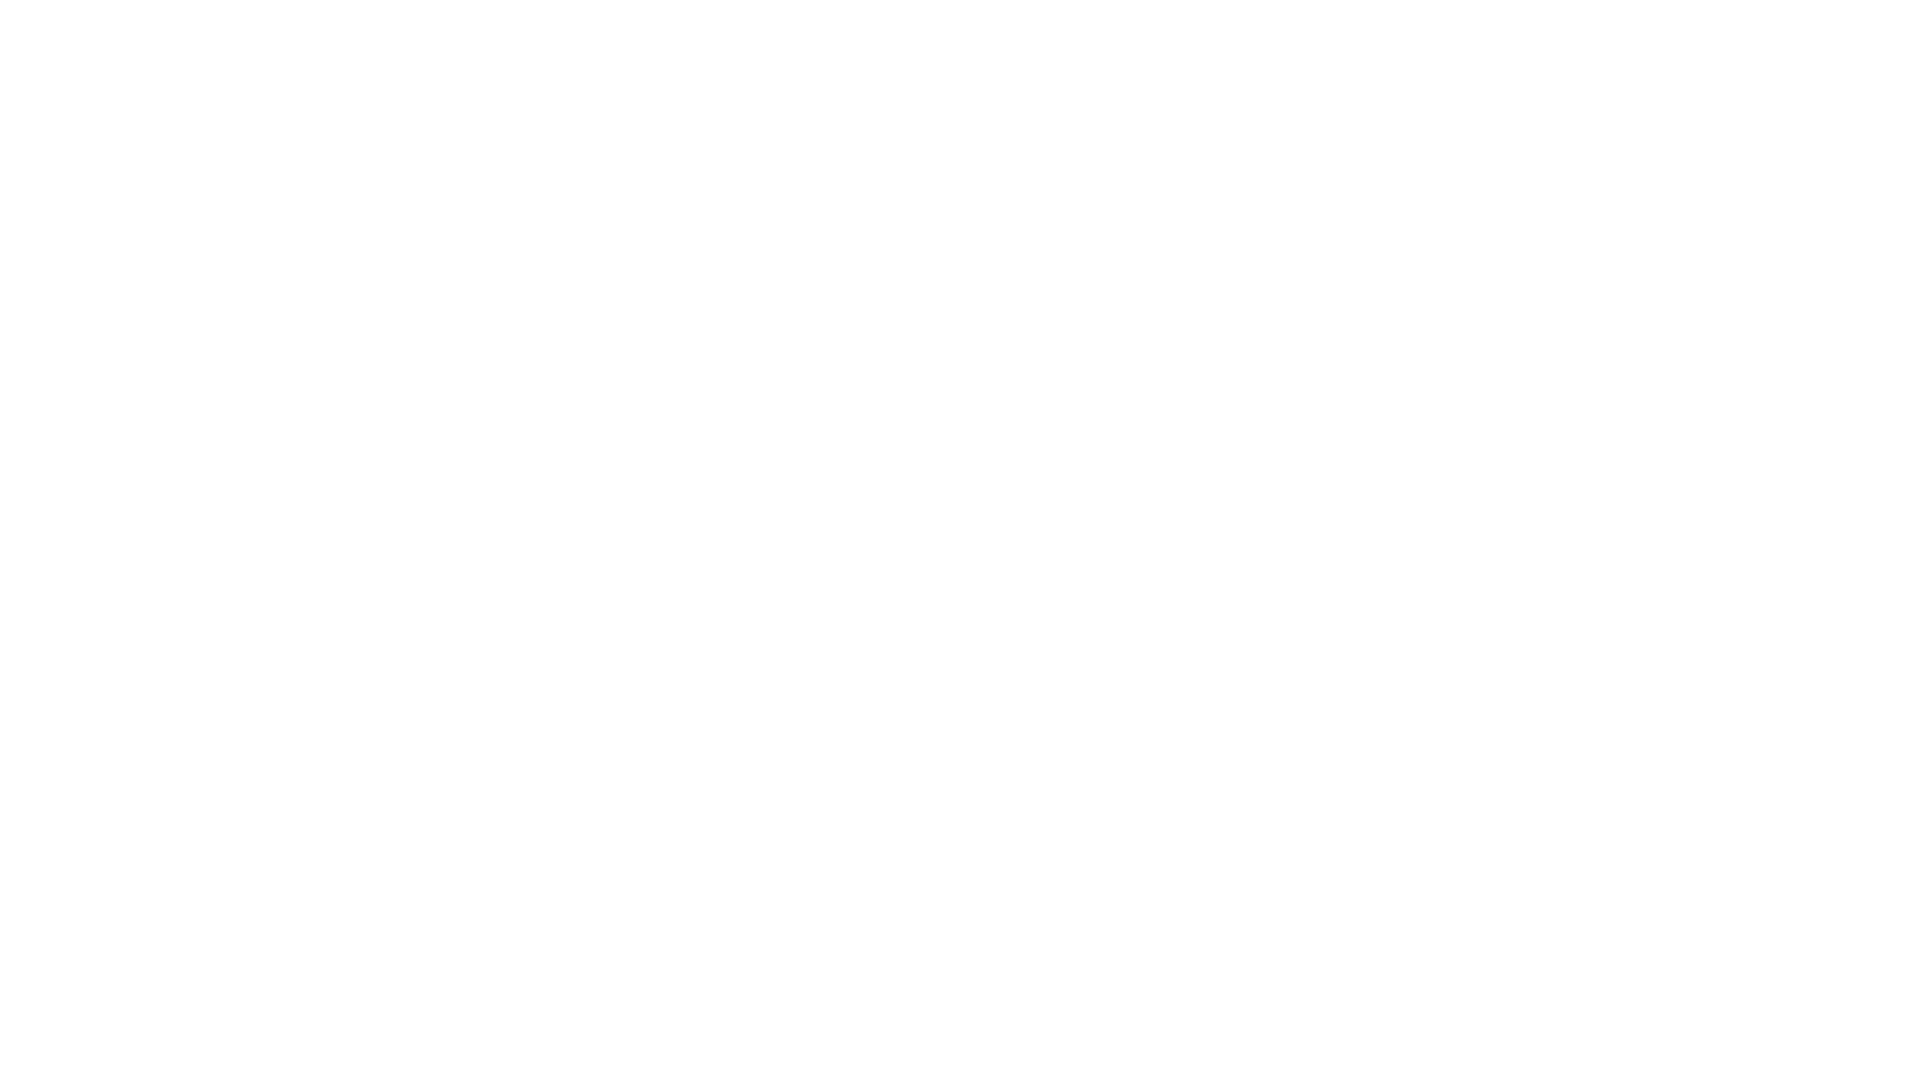 LS5 - semafory kolejowe